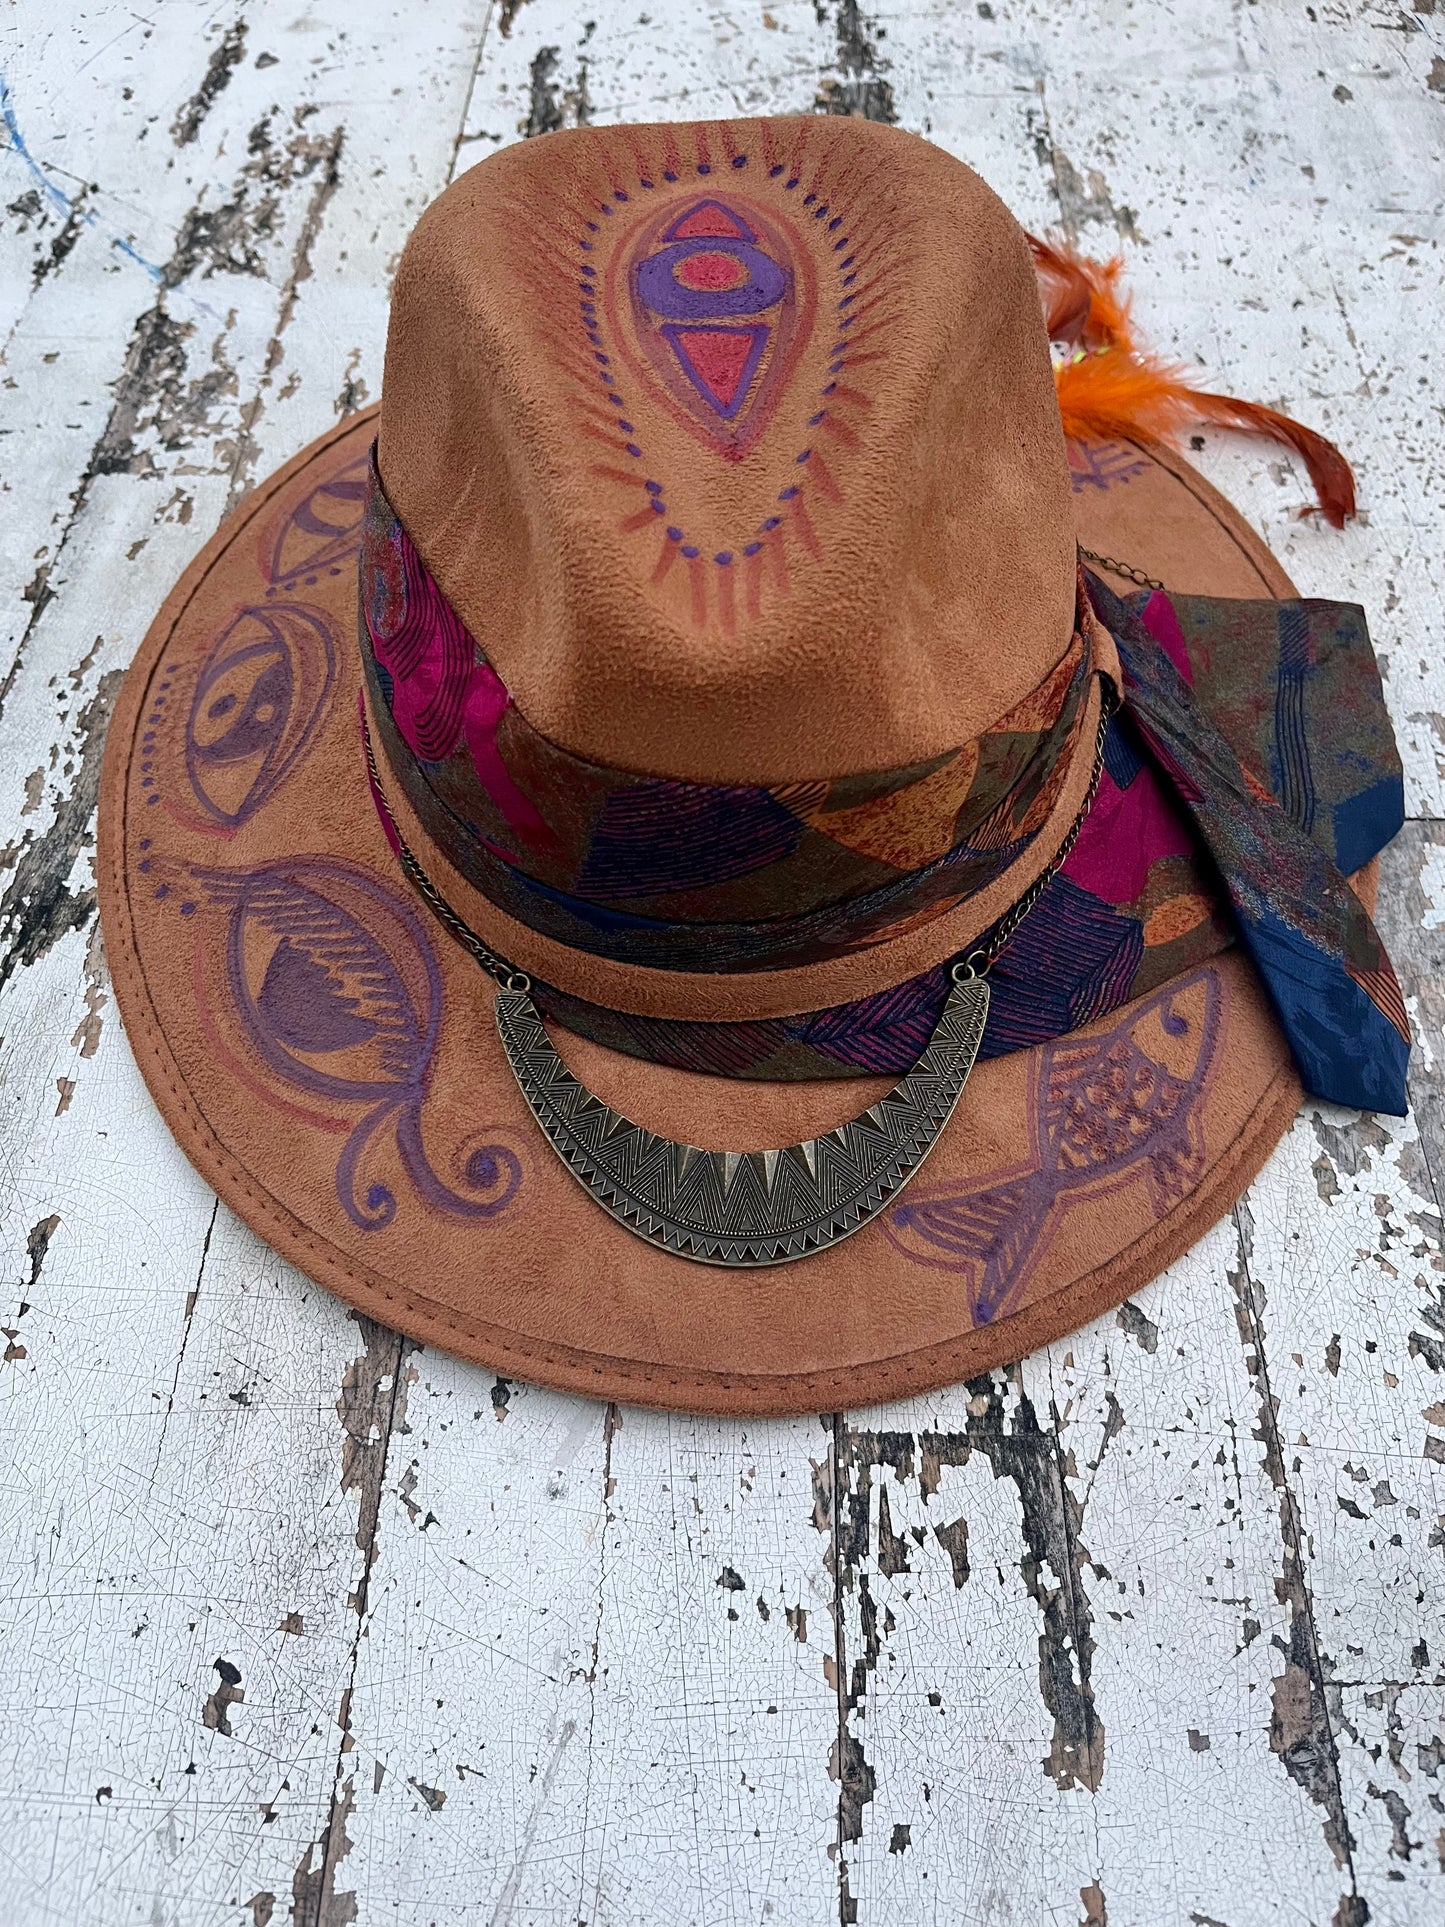 Desert Trip Hat.